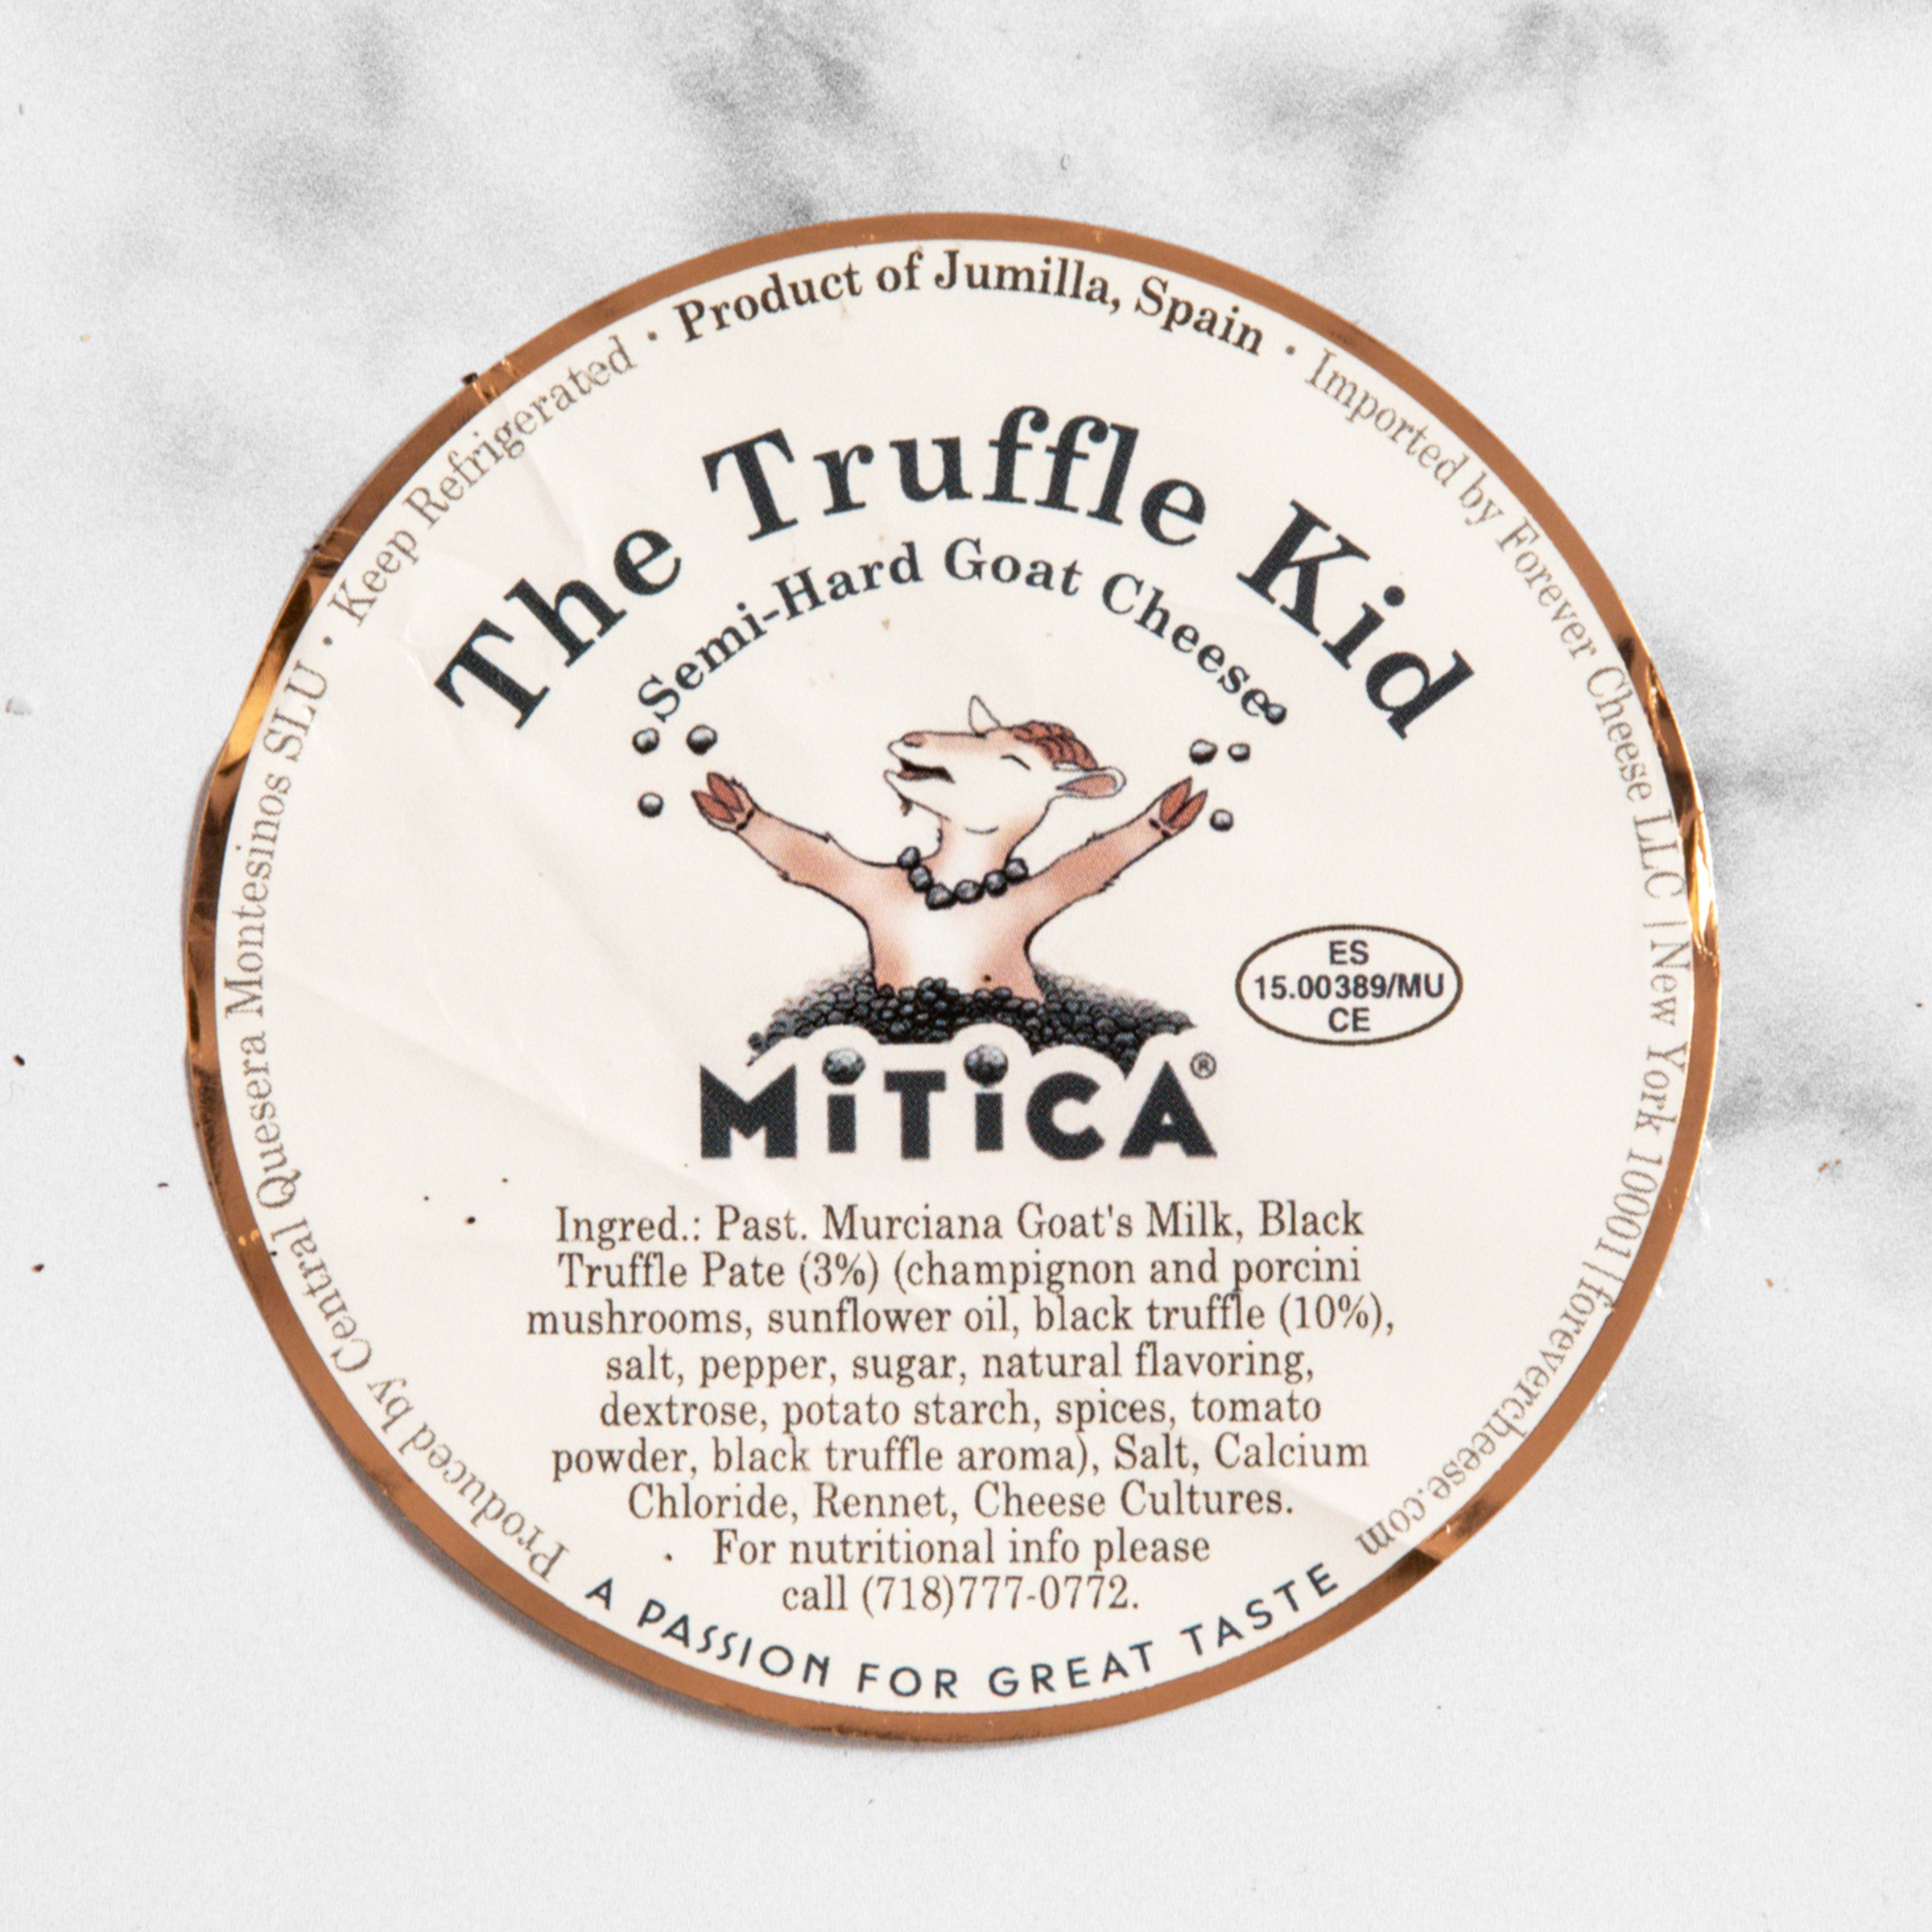 igourmet_15415_the truffle kid_mitica_Central Quesera Montesinos_cheese